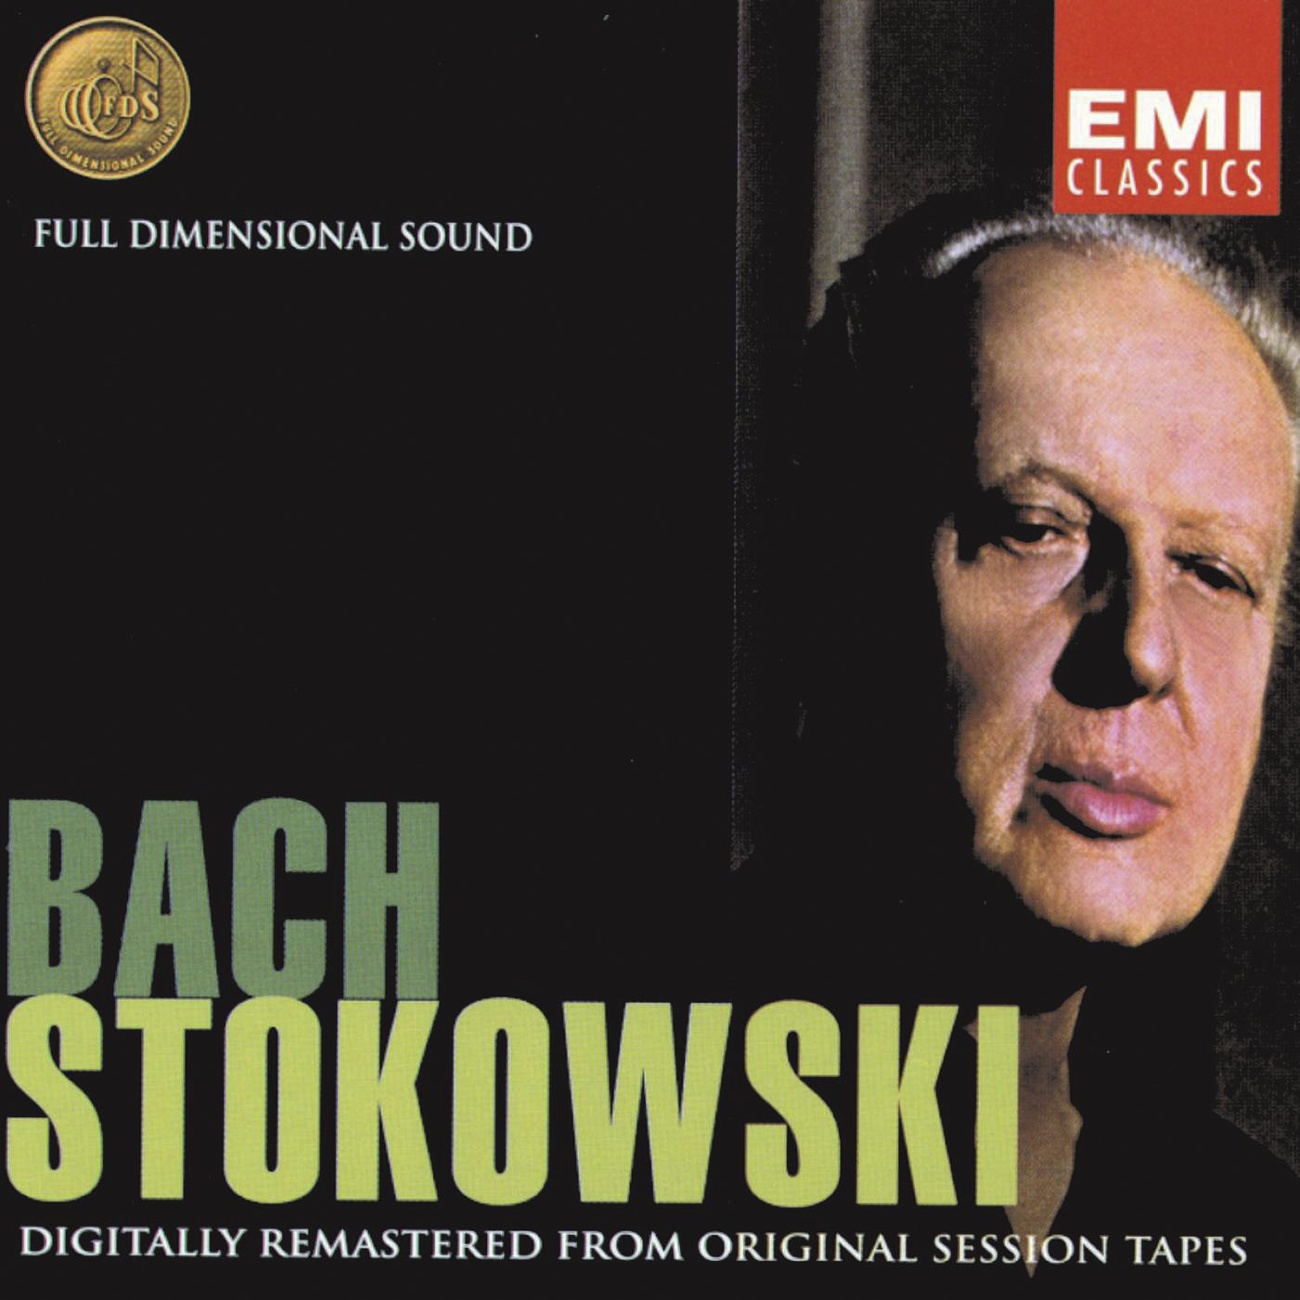 Toccata and Fugue in D minor BWV565 (arr. Stokowski) (1997 Digital Remaster): Toccata